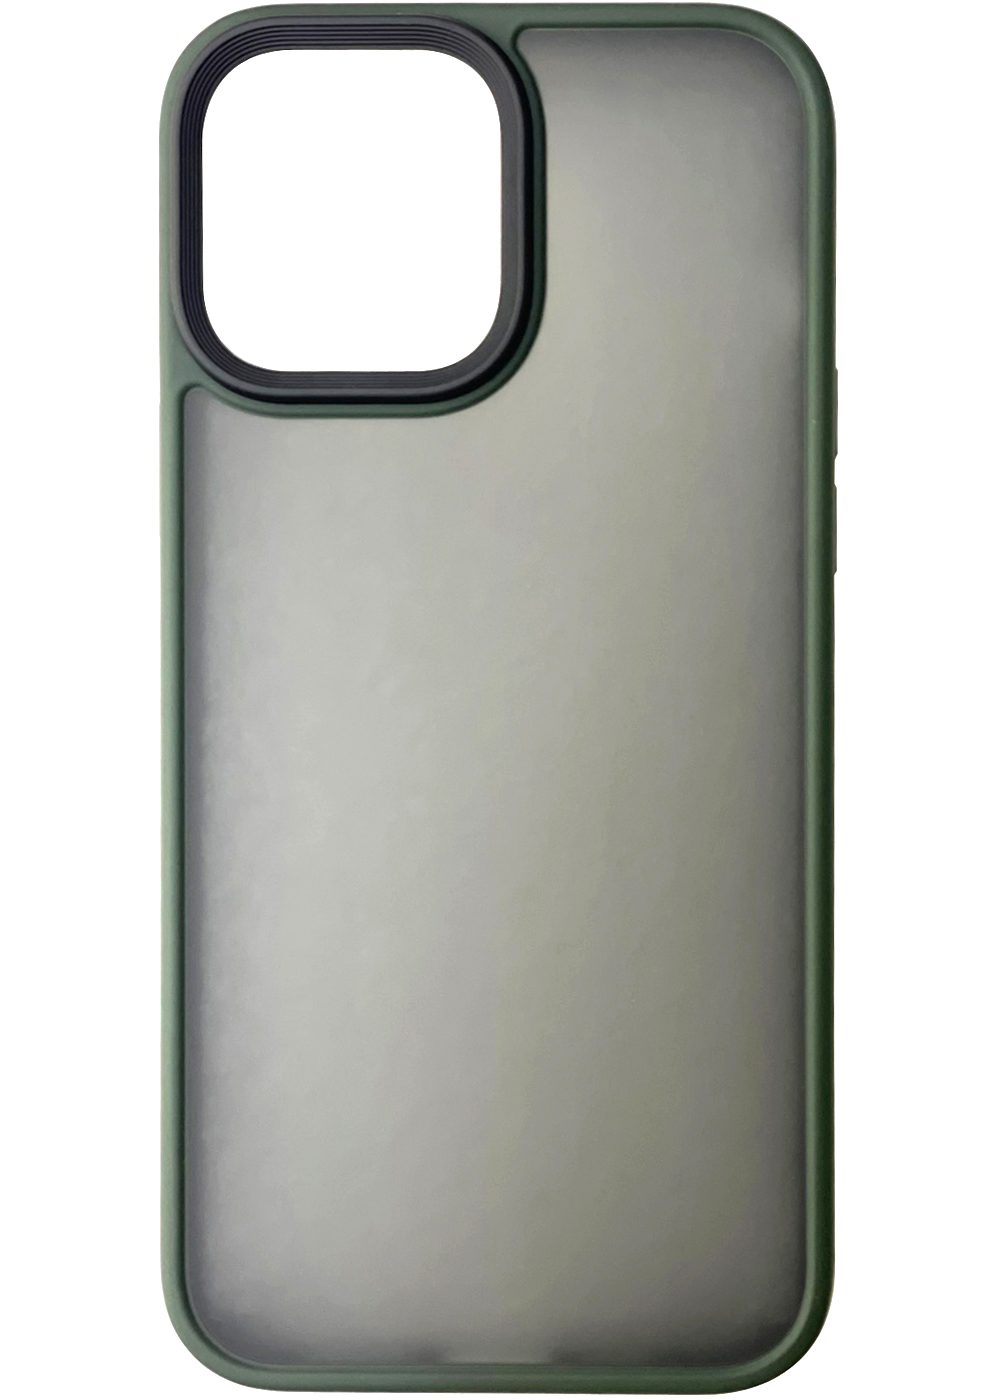 iPhone 11 Pro Max Smoke Transparent Twotone Green